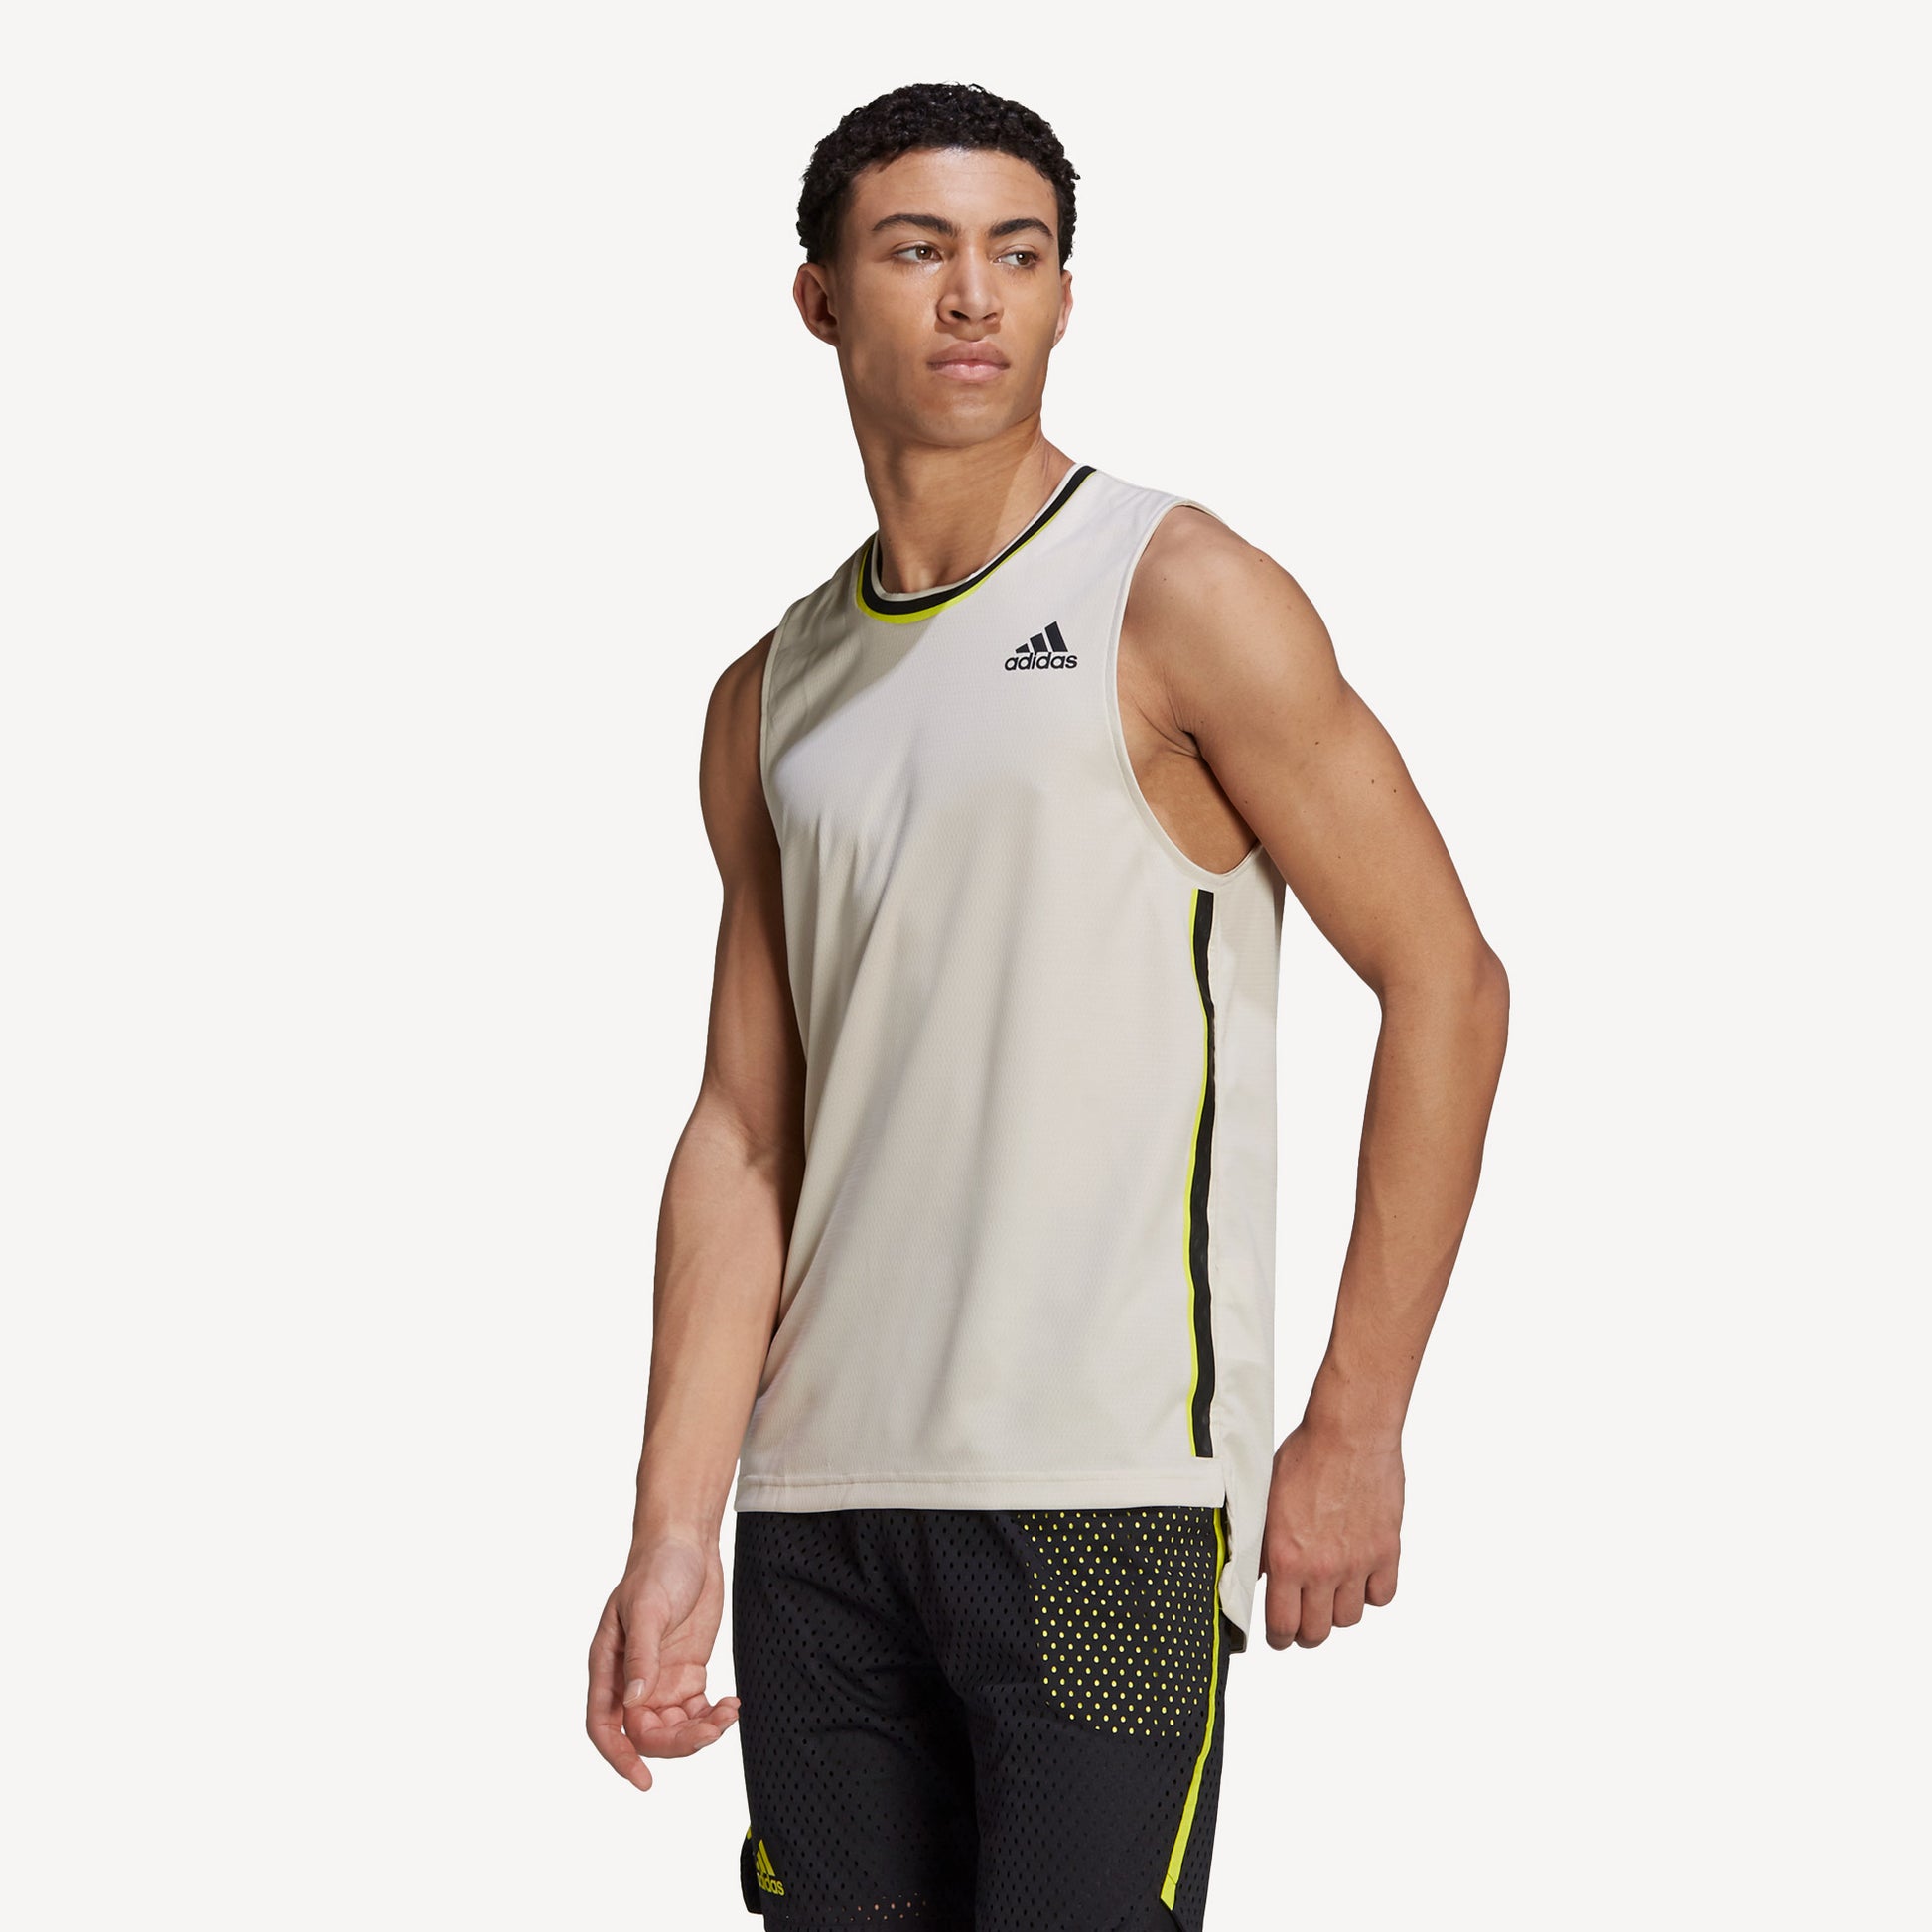 ritme Kansen Cornwall adidas Primeblue Heat Ready Men's Sleeveless Tennis Shirt – Tennis Only